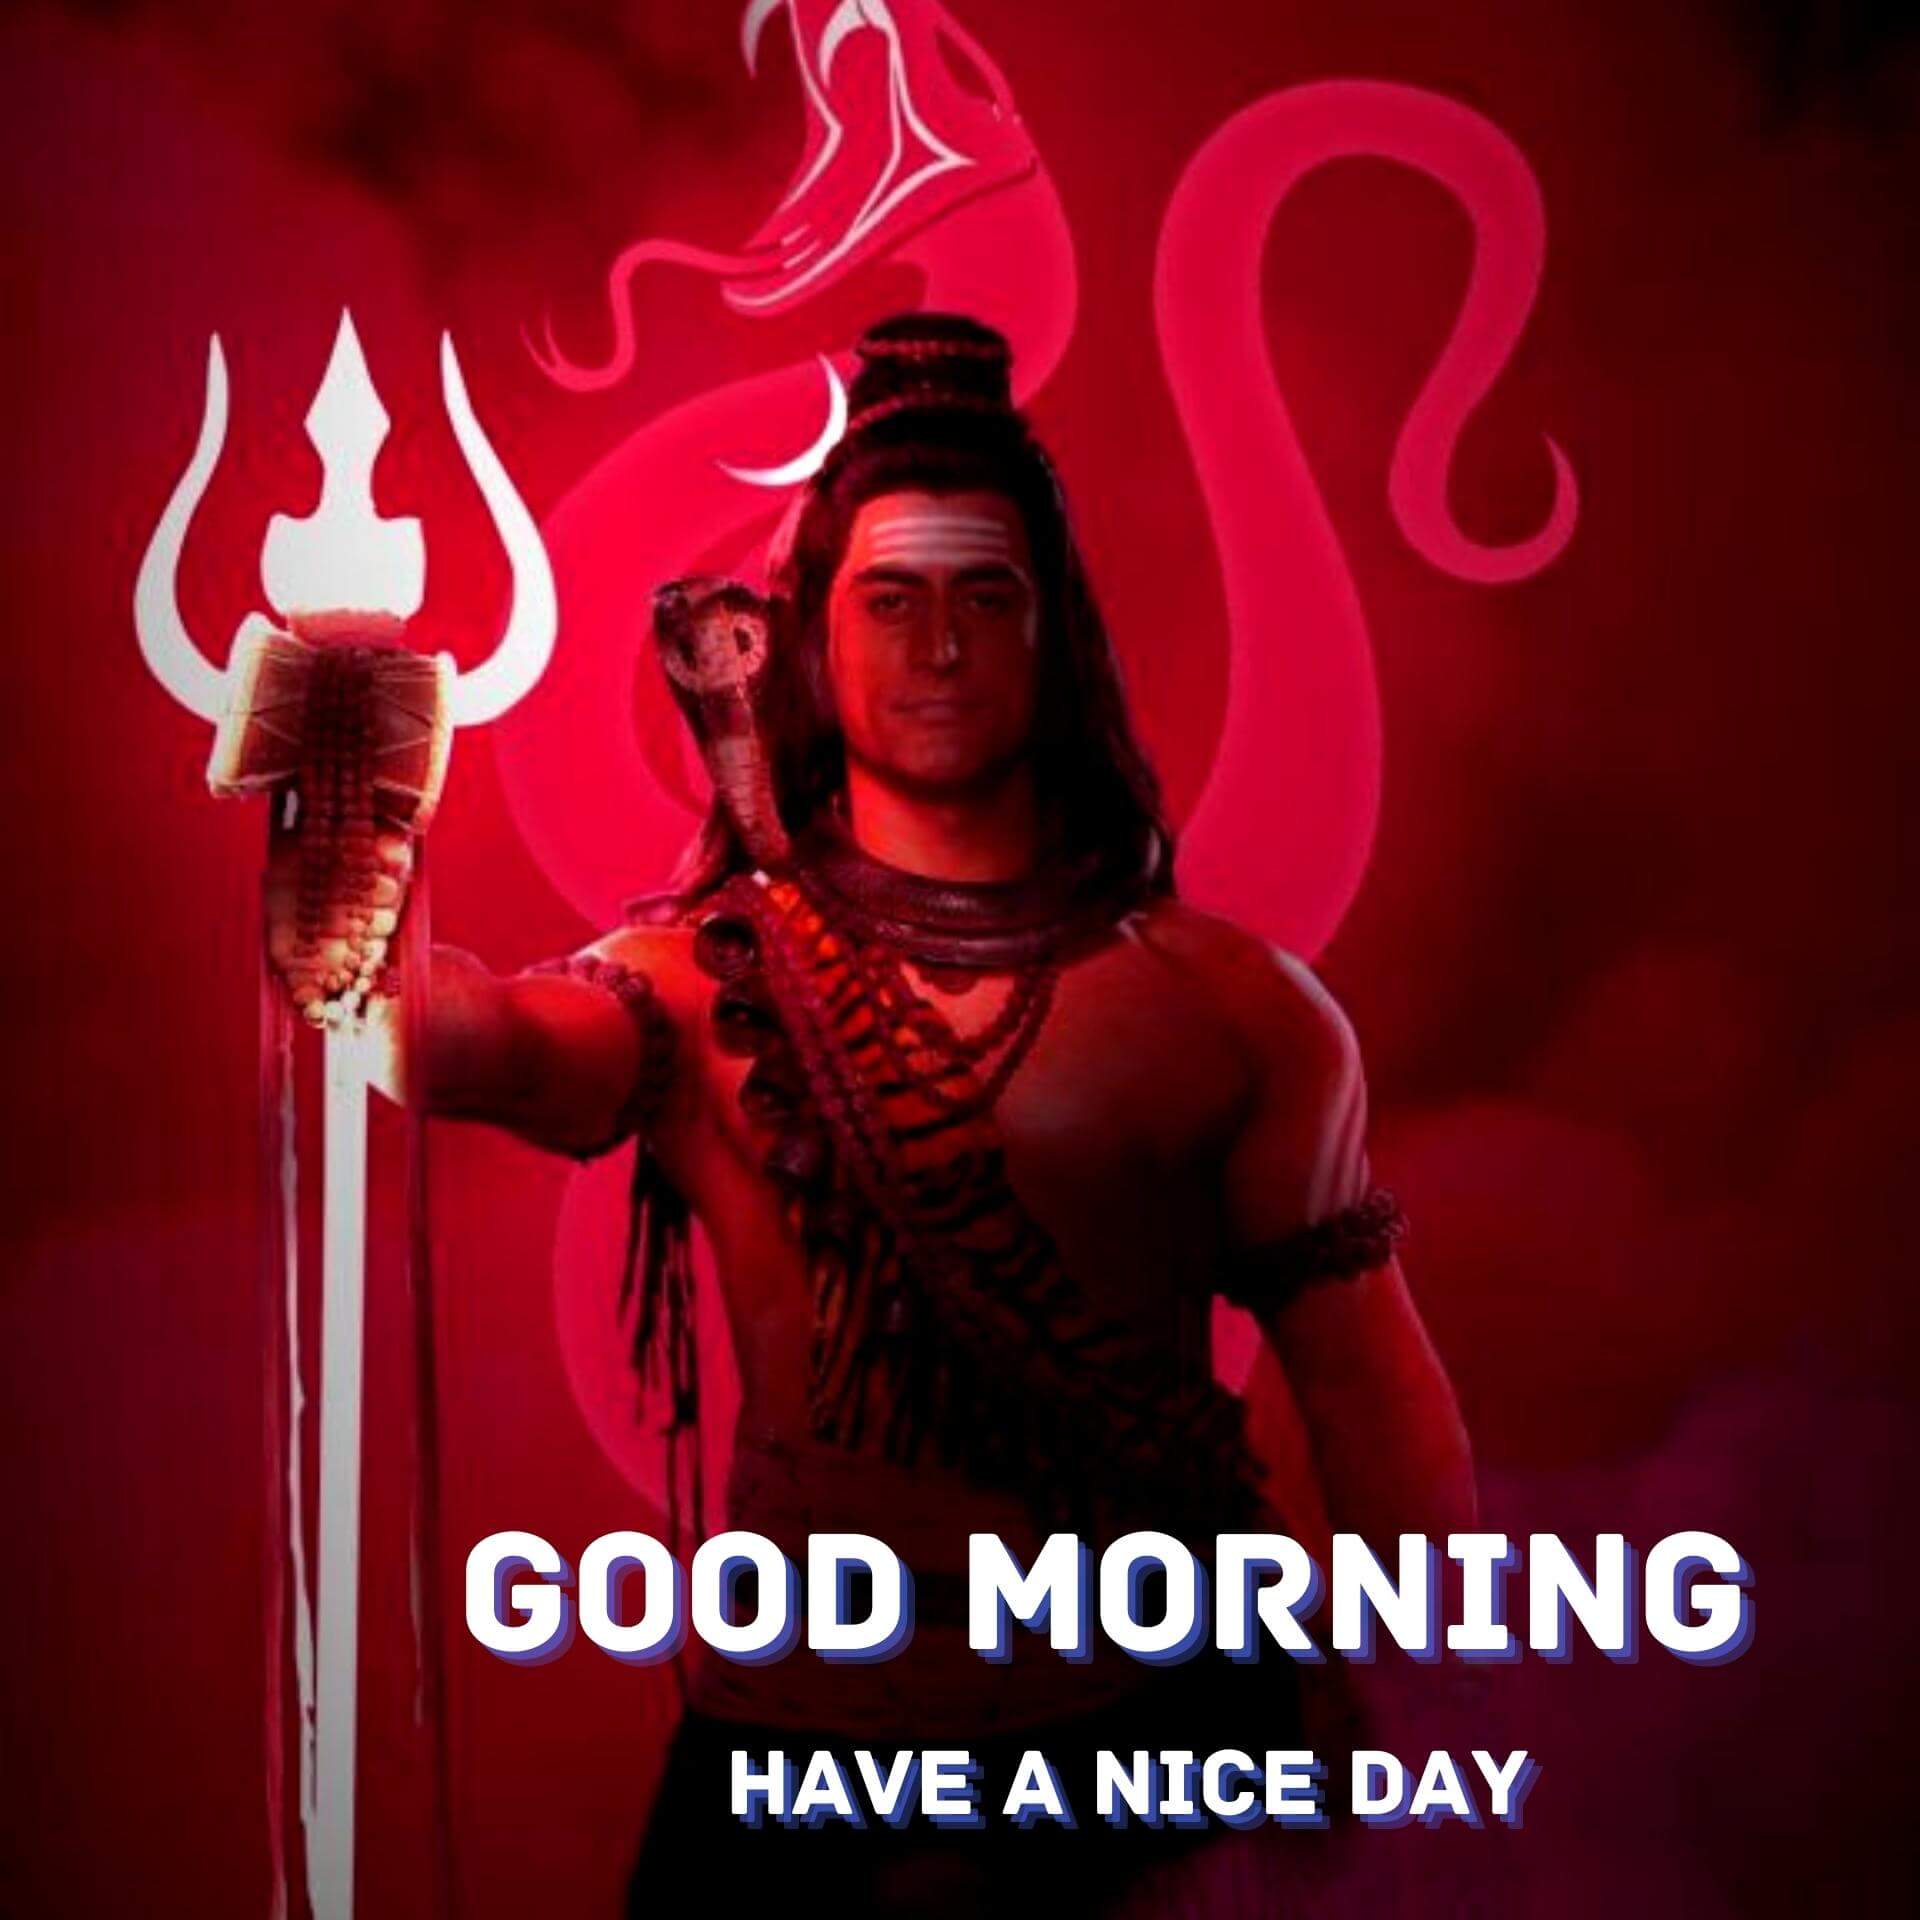 Free Best Shiva Good Morning Wallpaper Download for Whatsapp